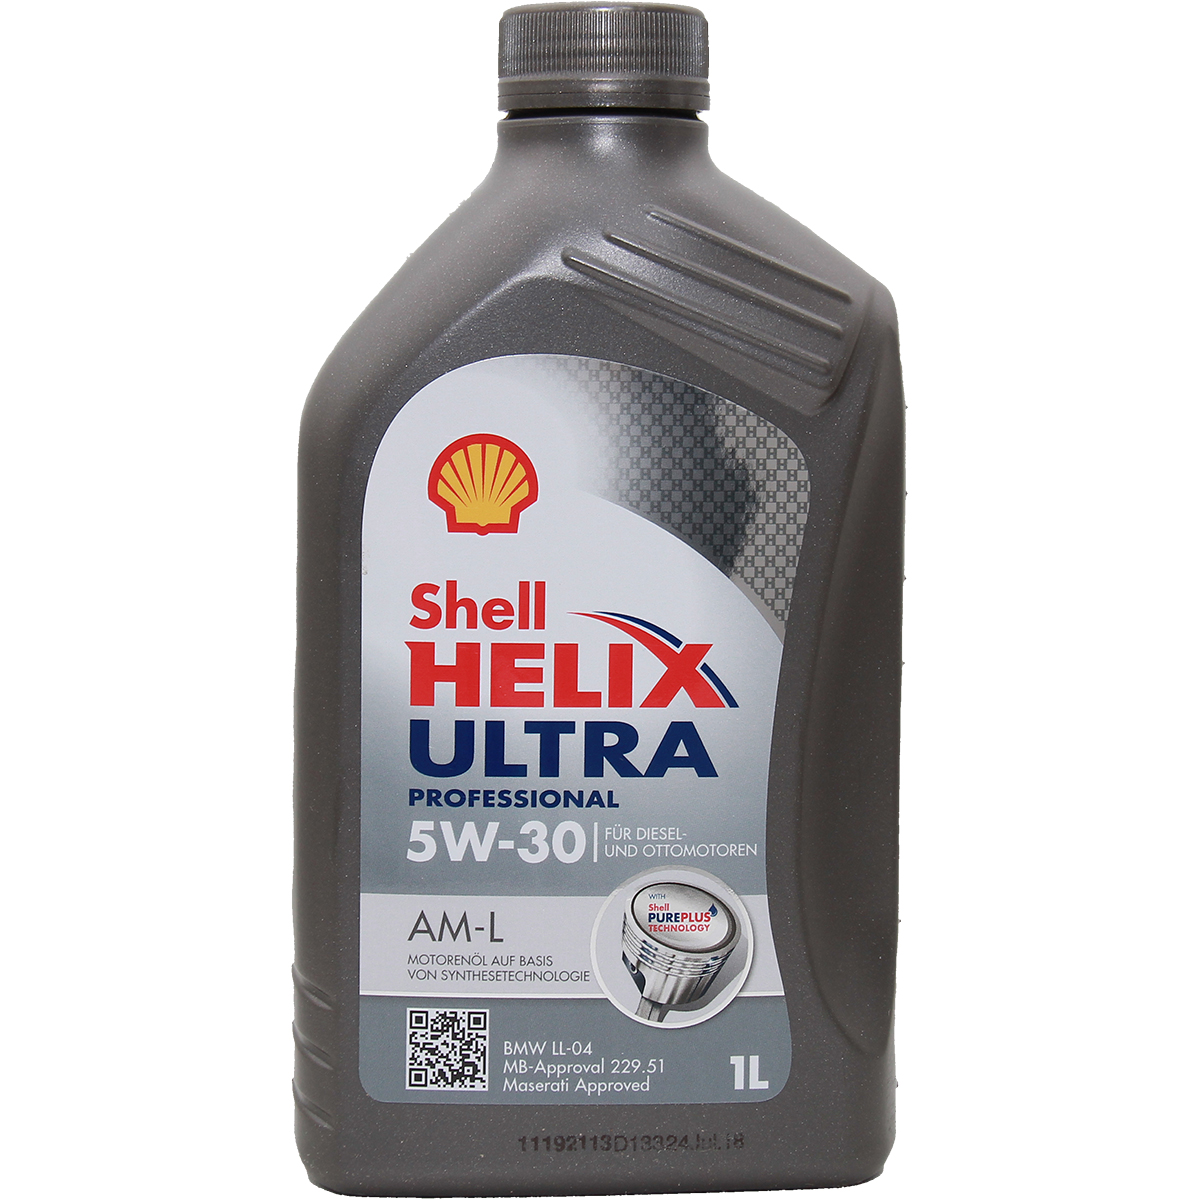 Shell Helix Ultra Professional AM-L 5W-30 1 Liter